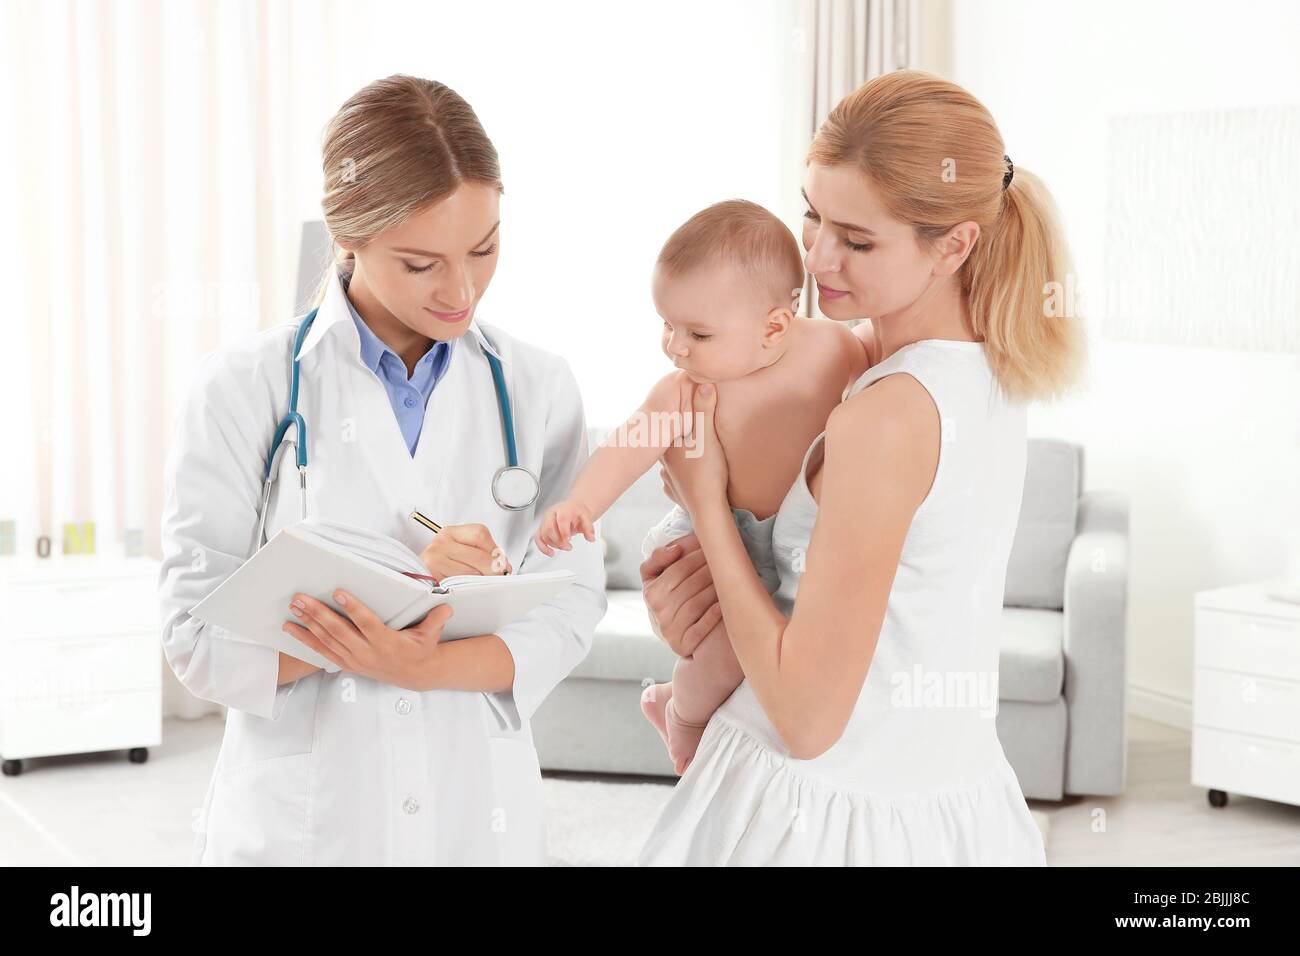 Сестра мама врач. Педиатр и ребенок. Мама с ребенком у врача. Врач и ребенок. Мама с ребенком в поликлинике.